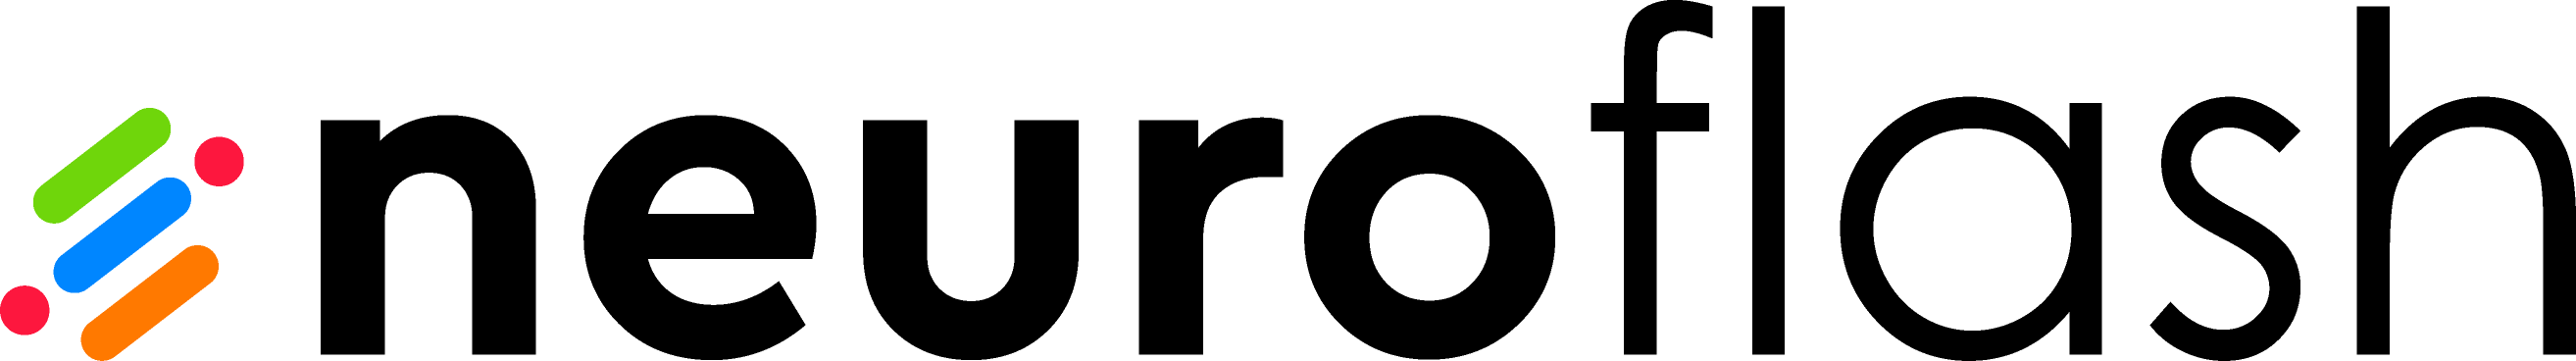 The neuroflash official logo